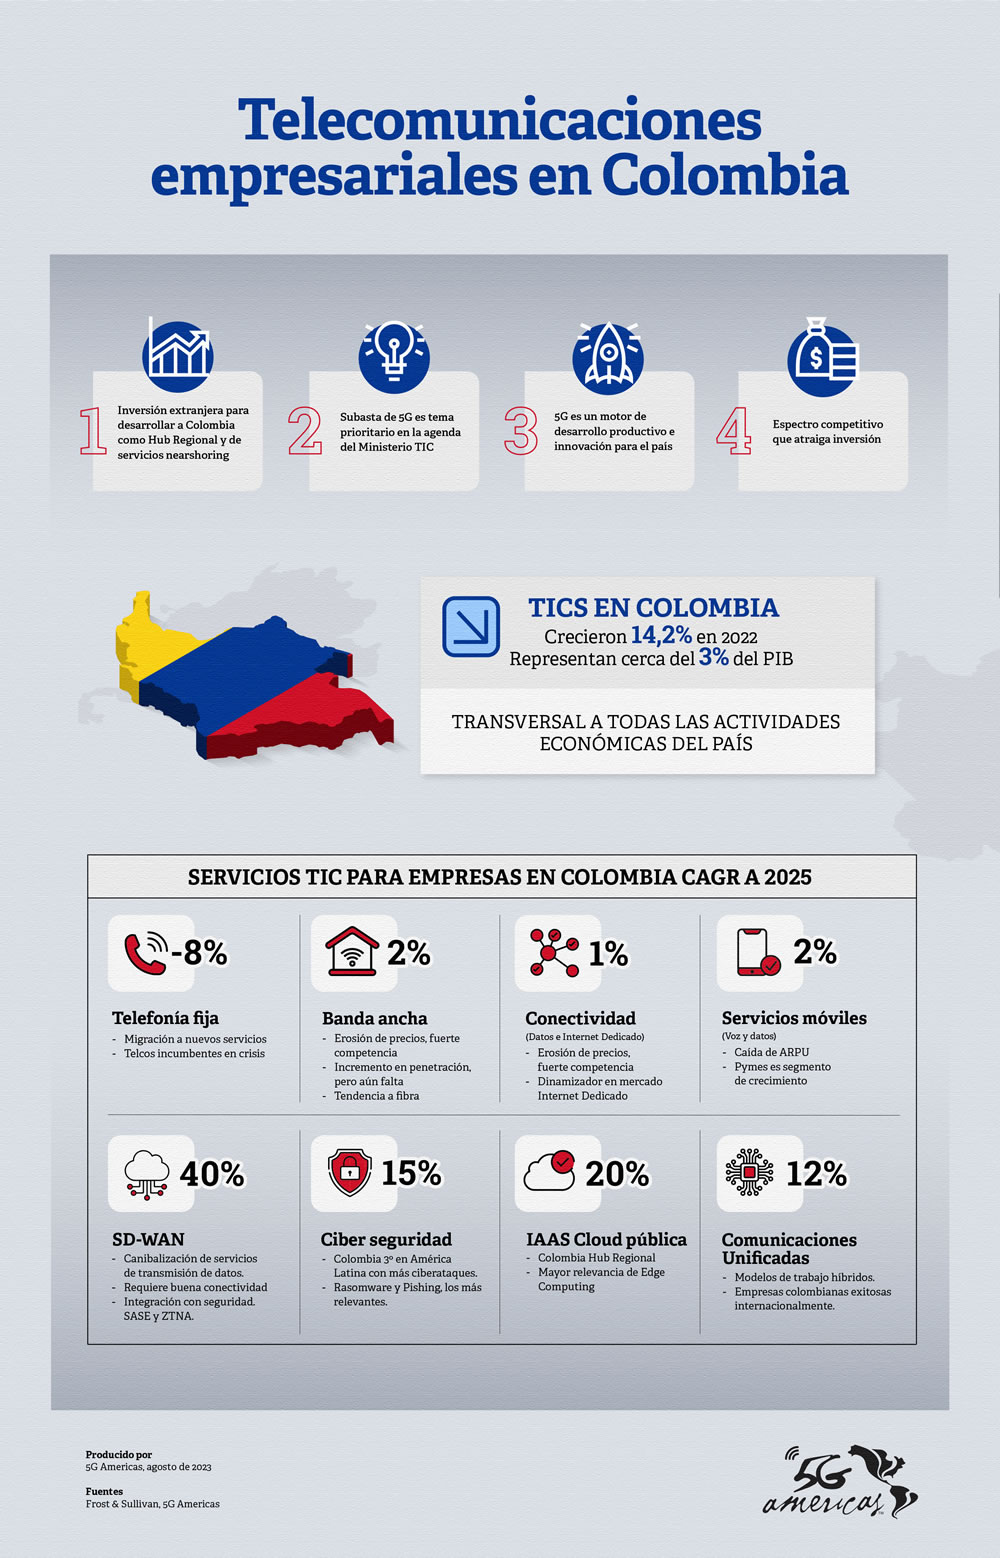 5G Americas: 5G motor de desarrollo productivo e innovación para Colombia